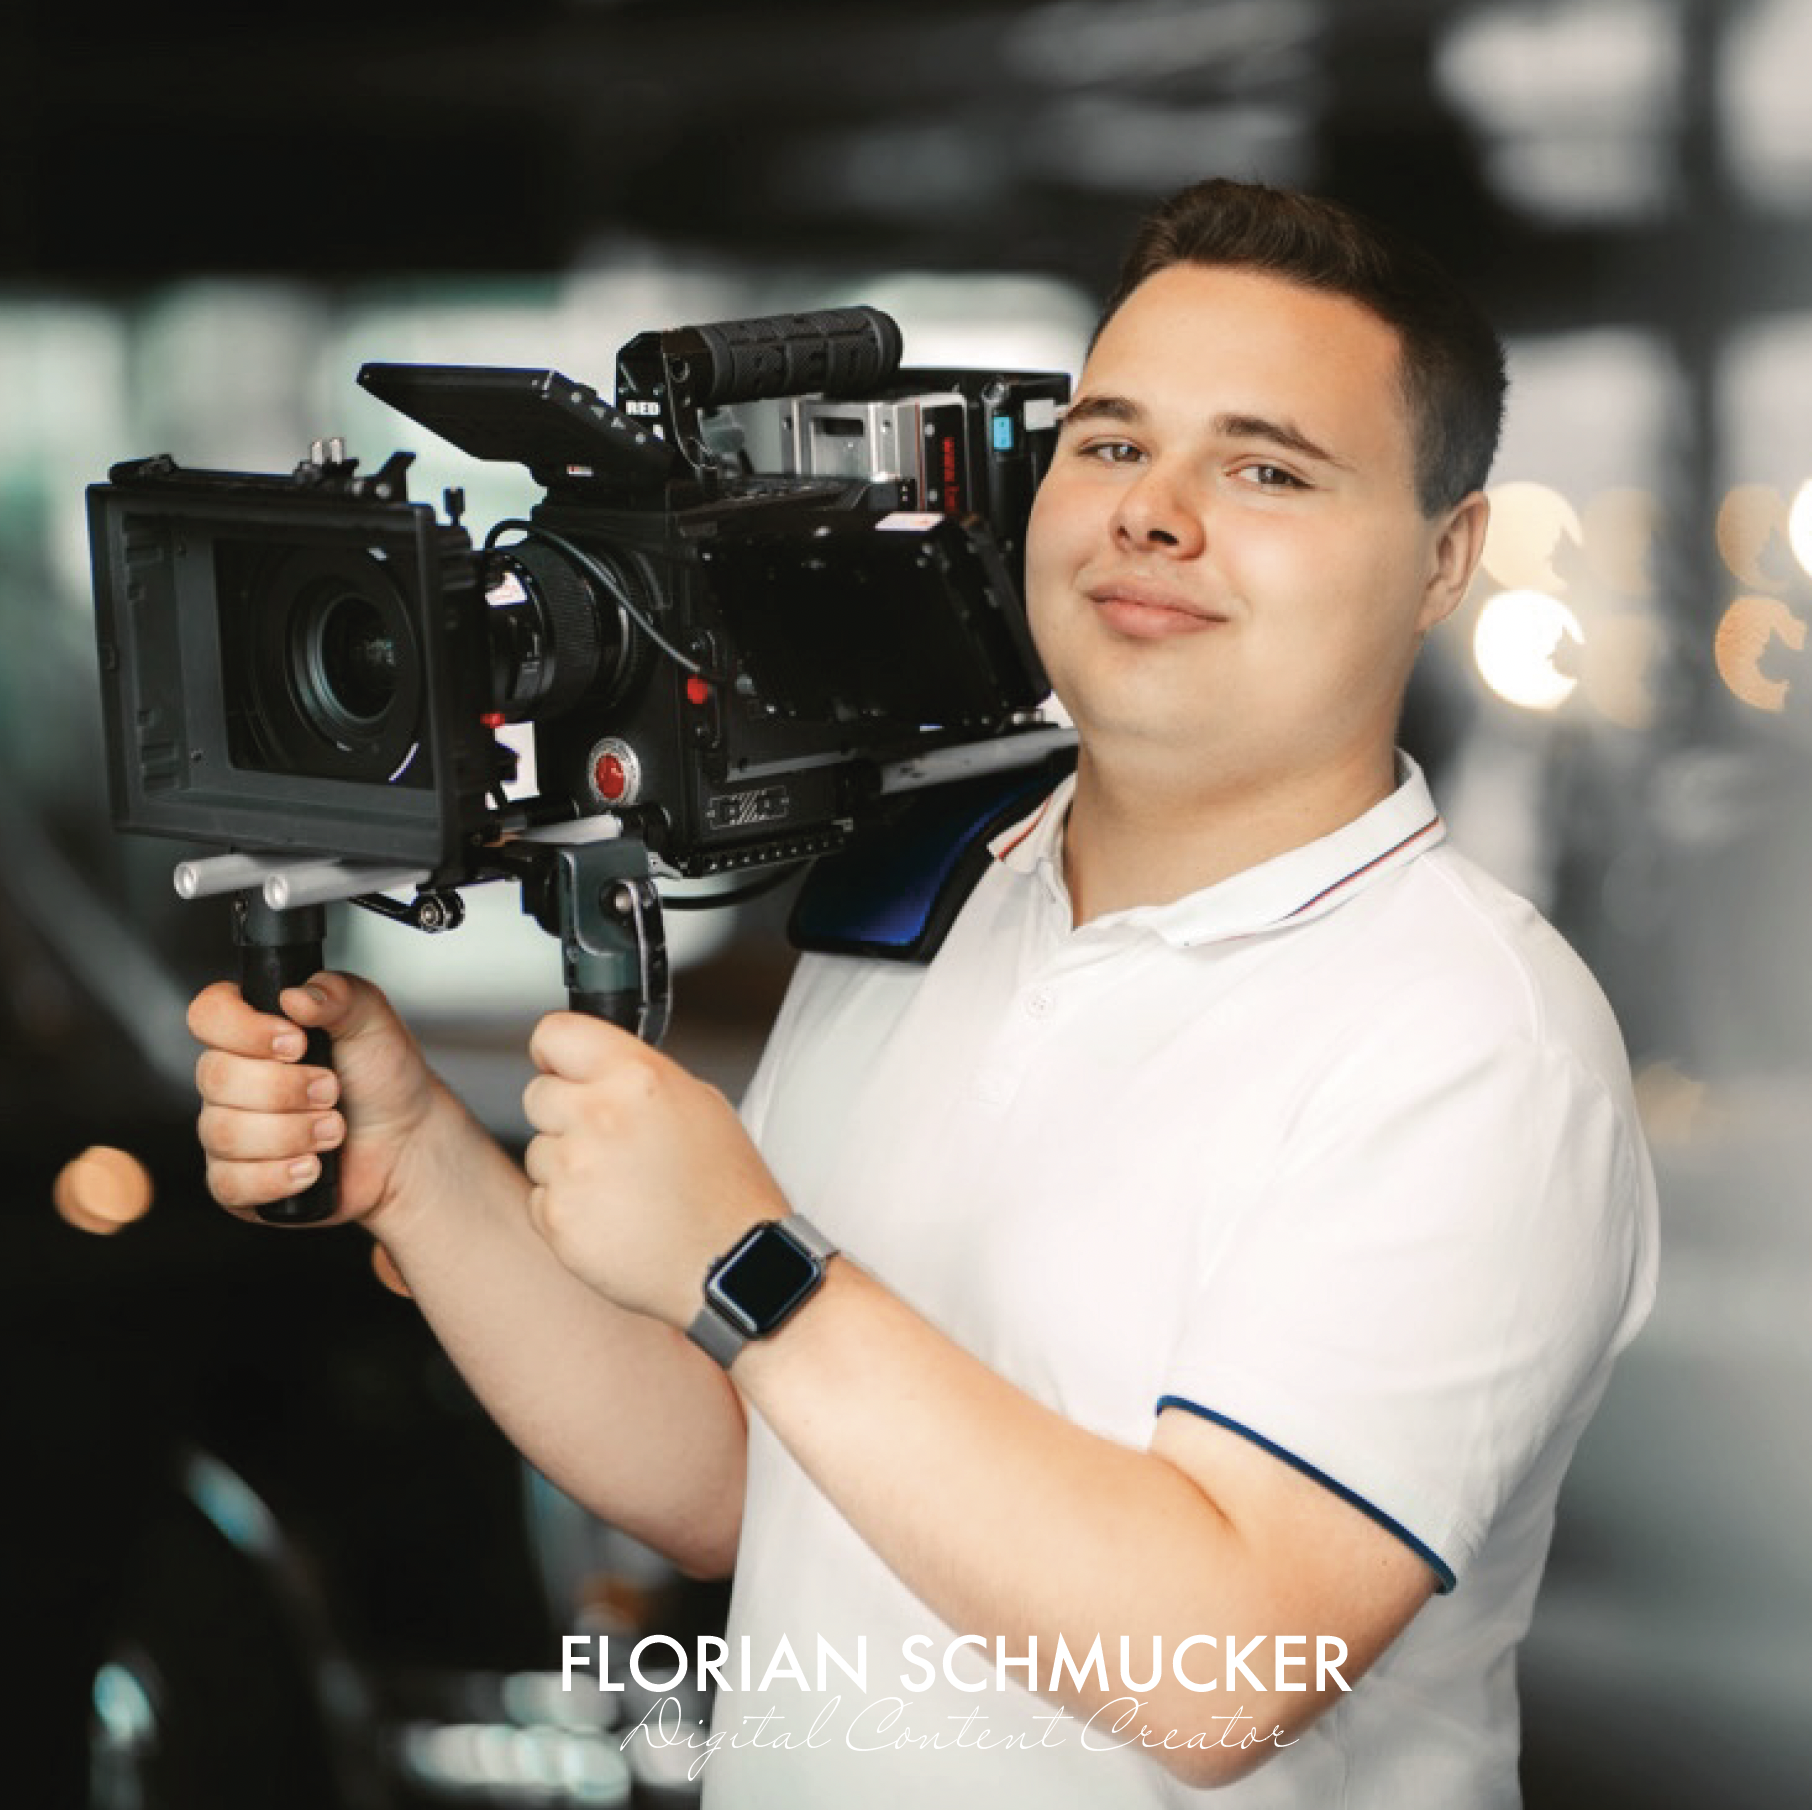 Arthur Bechtel Classic Motors - Florian Schmucker, camera, video